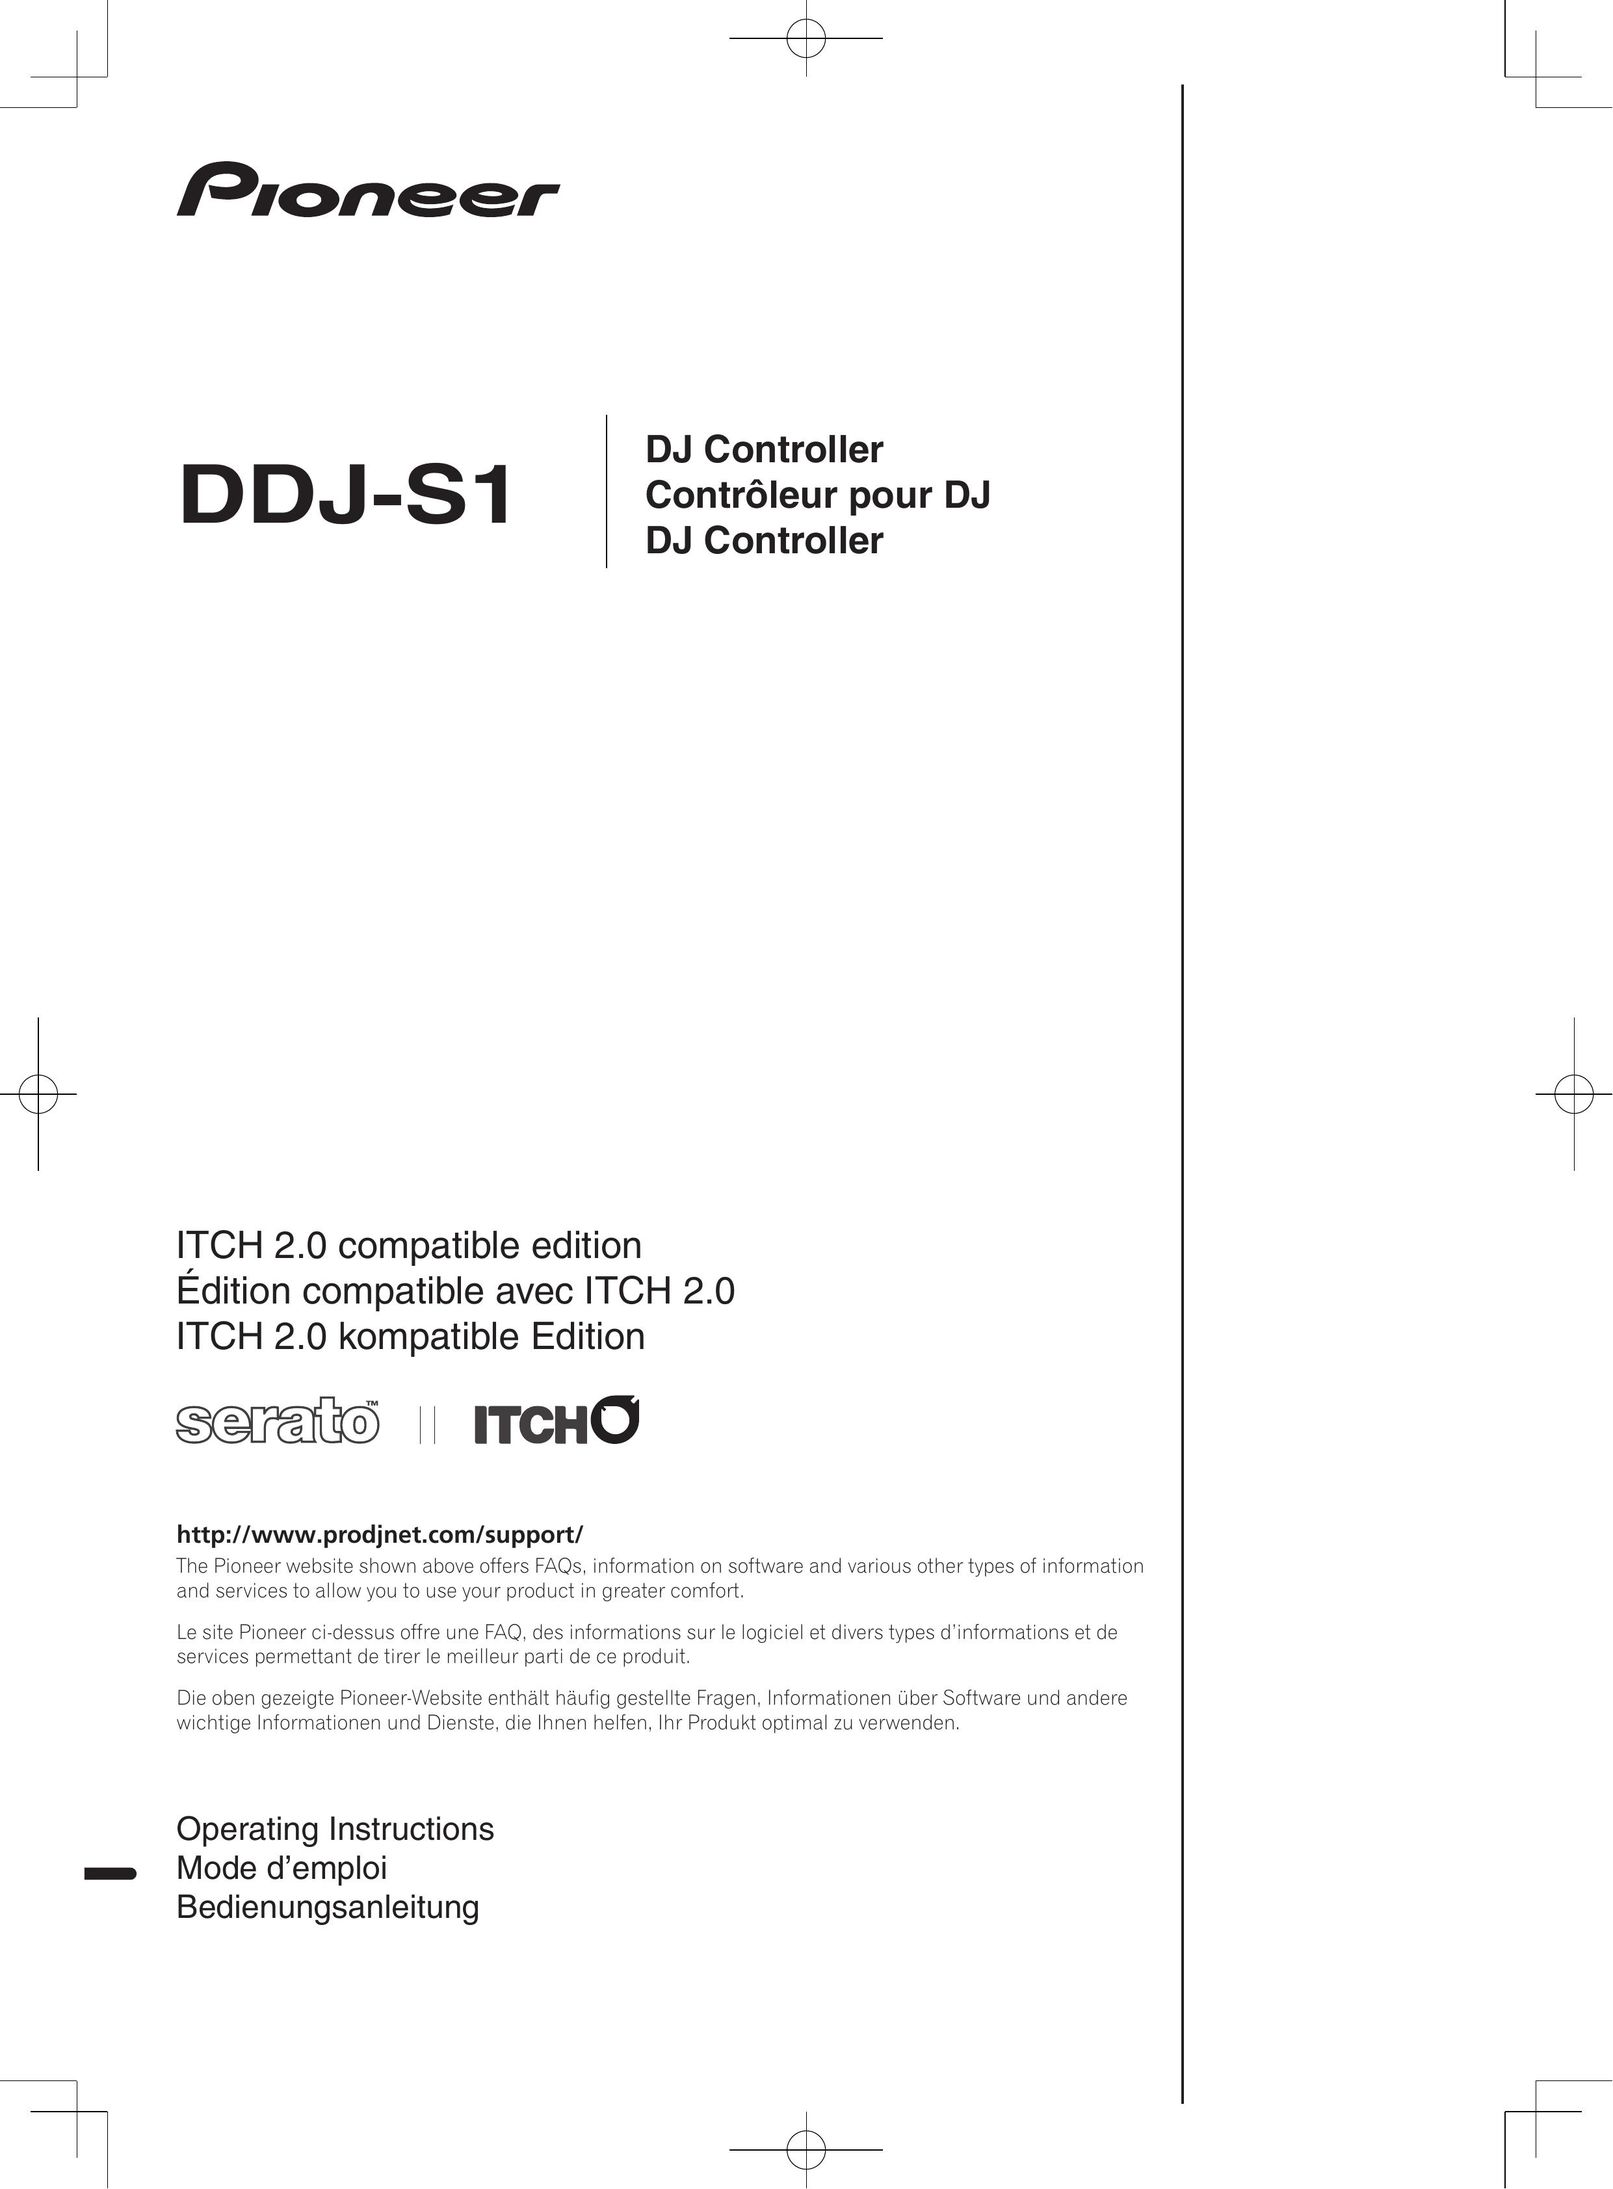 Pioneer DDJ-S1 Video Game Controller User Manual